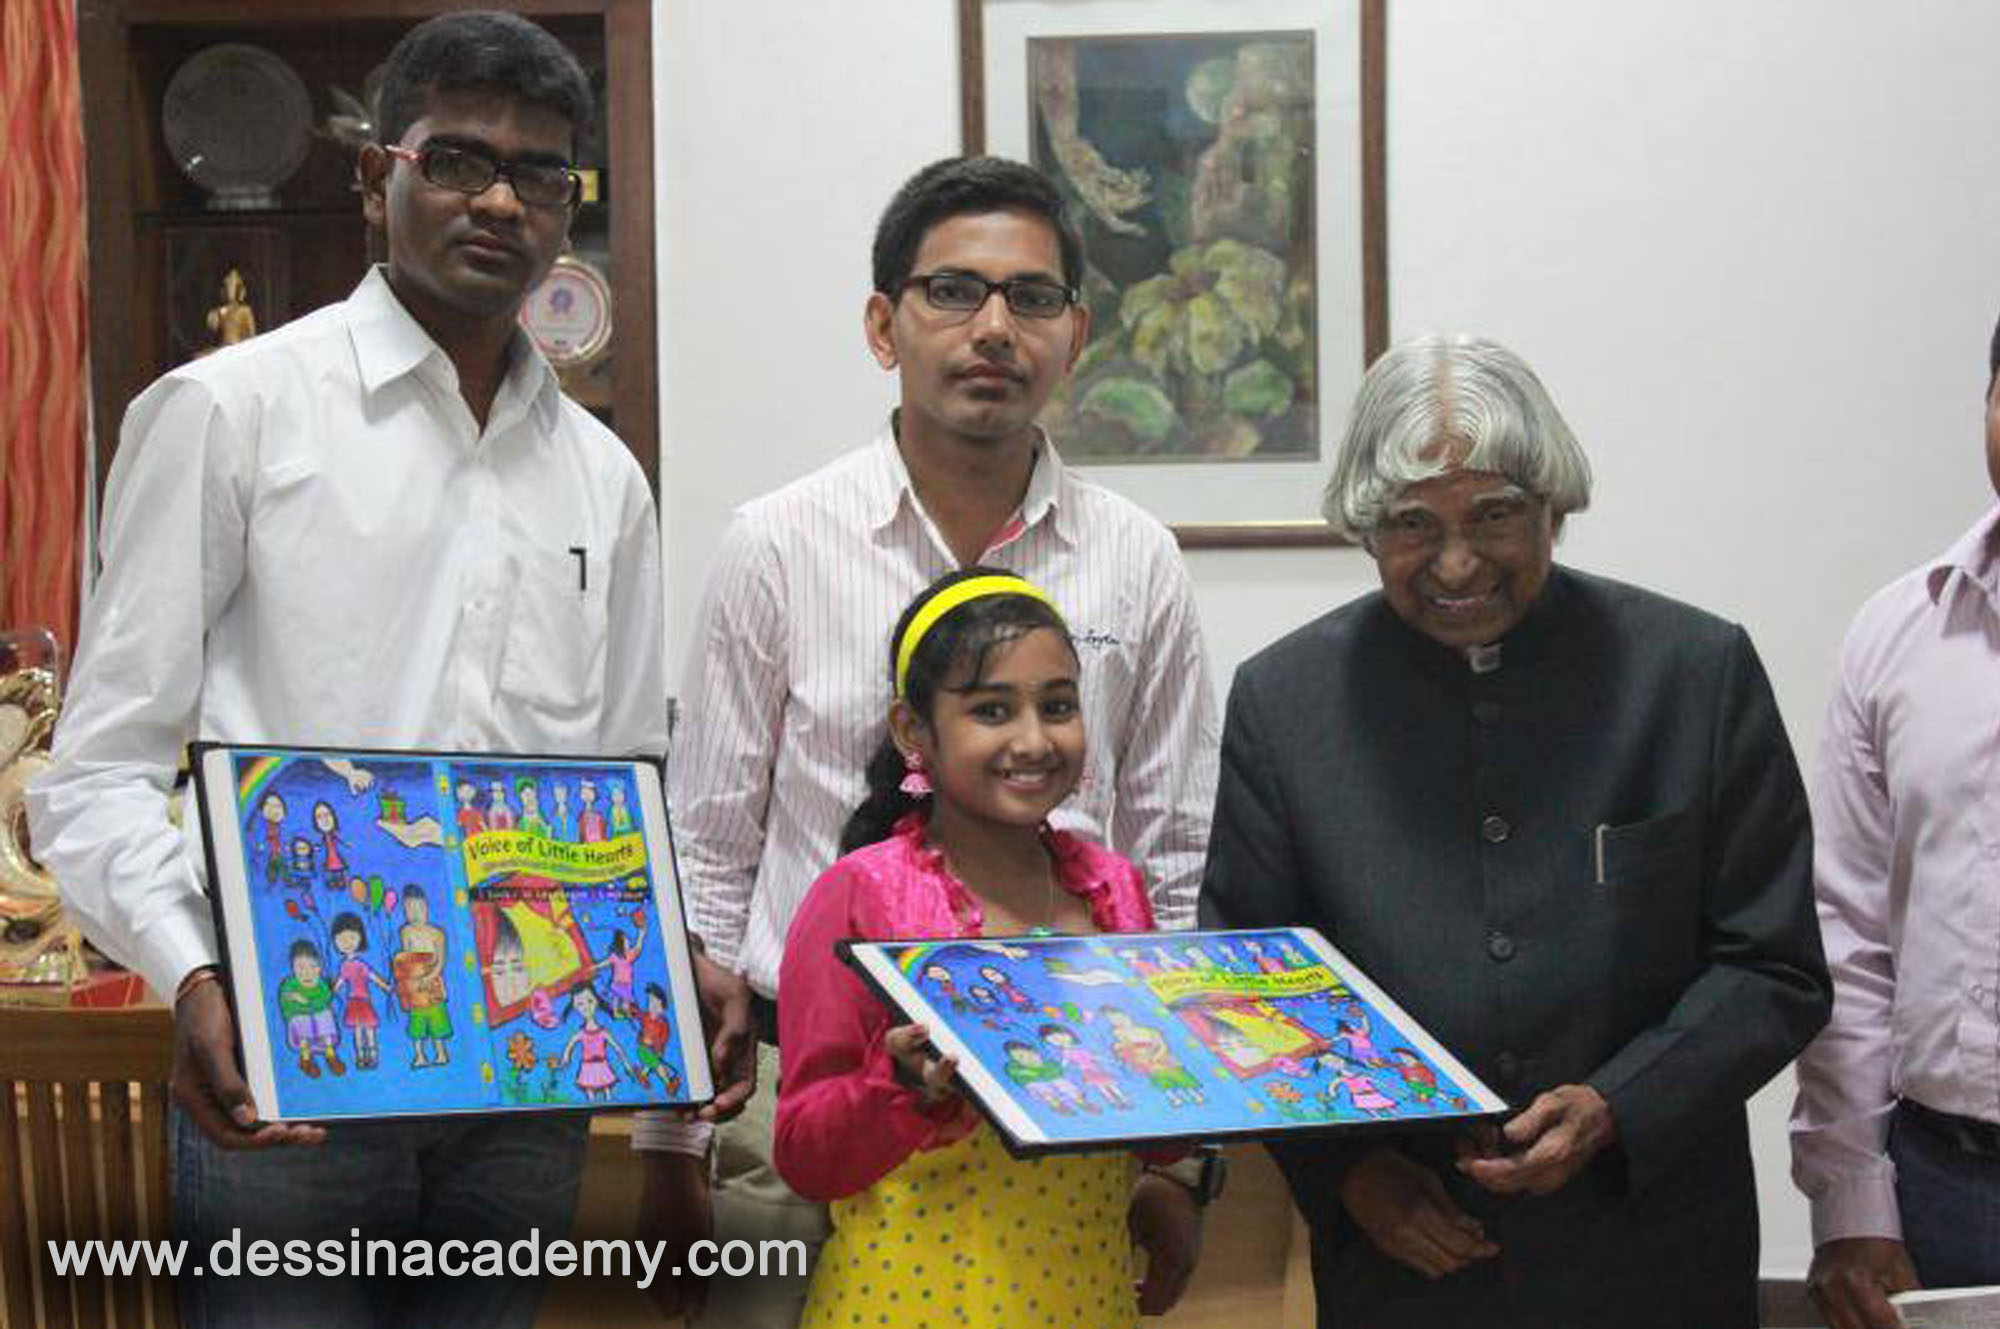 Dessin School of Arts Students Acheivement 1, Dessin School of Arts, Watercolour Painting Classes in Marine Drive, Mumbai